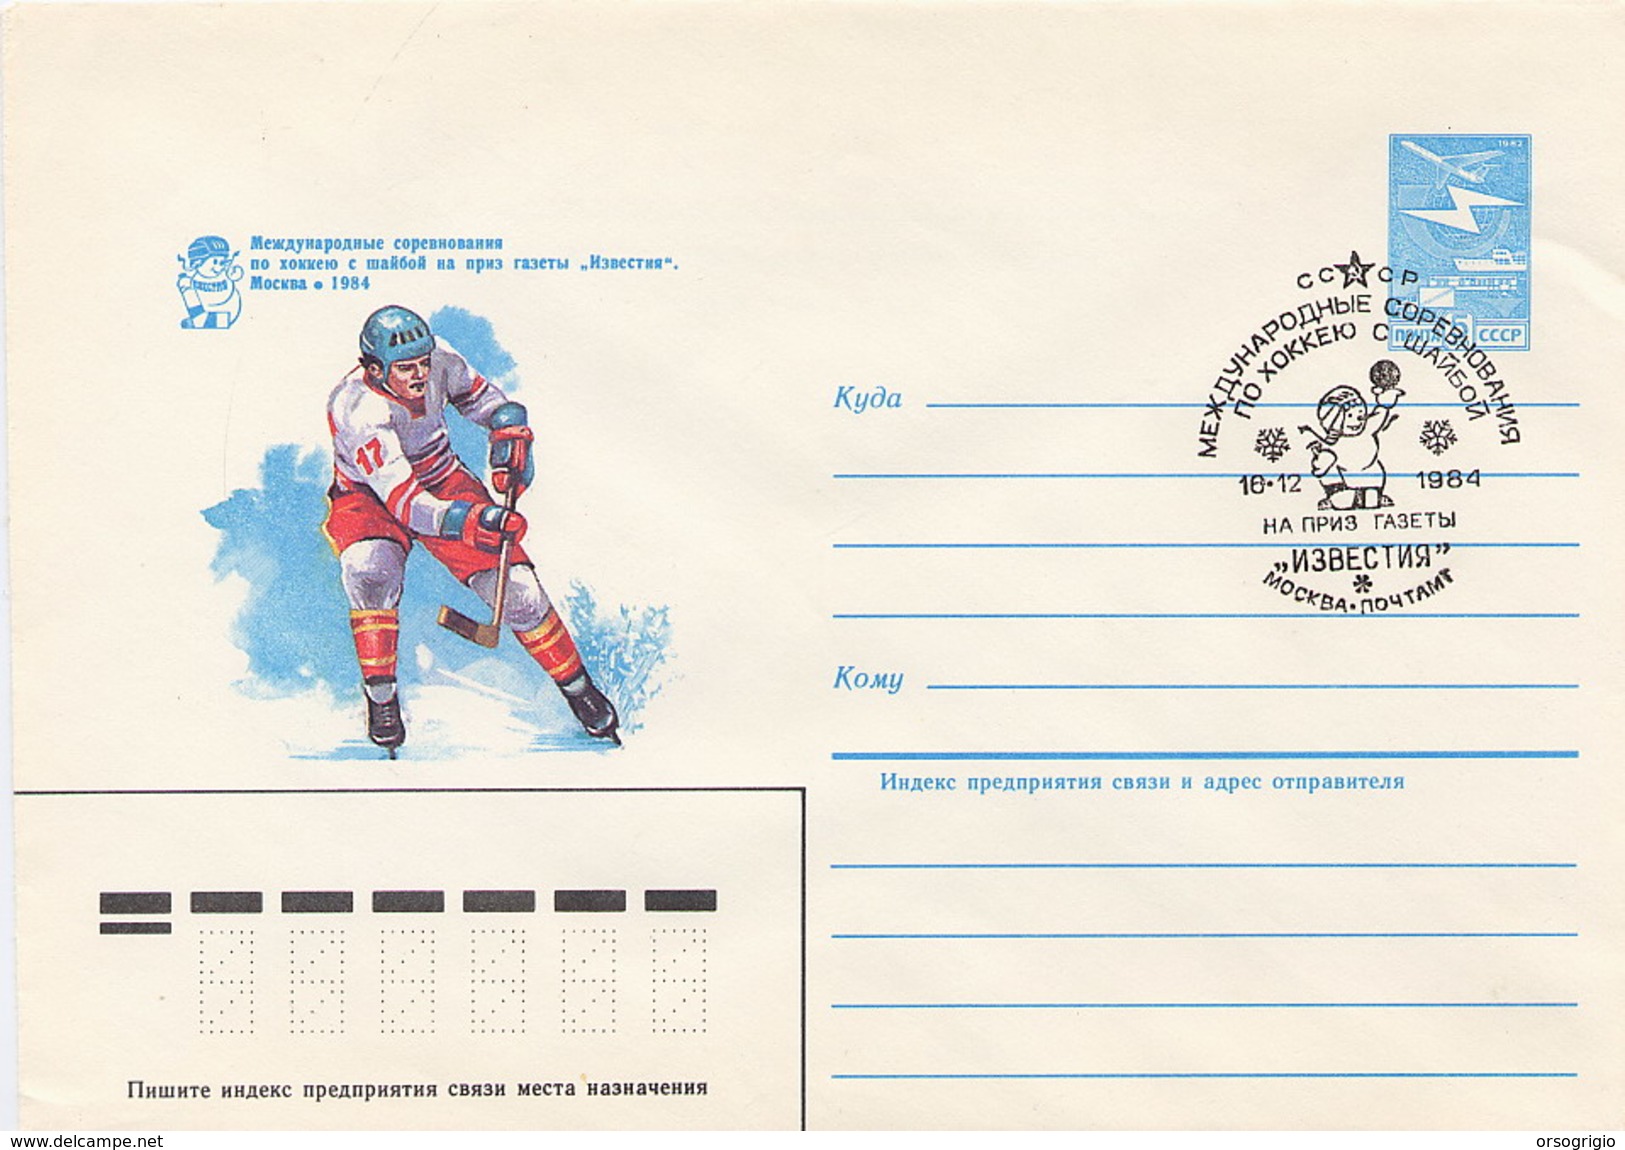 RUSSIA - HOCKEY ON ICE - Intero Postale - Hockey (Ice)